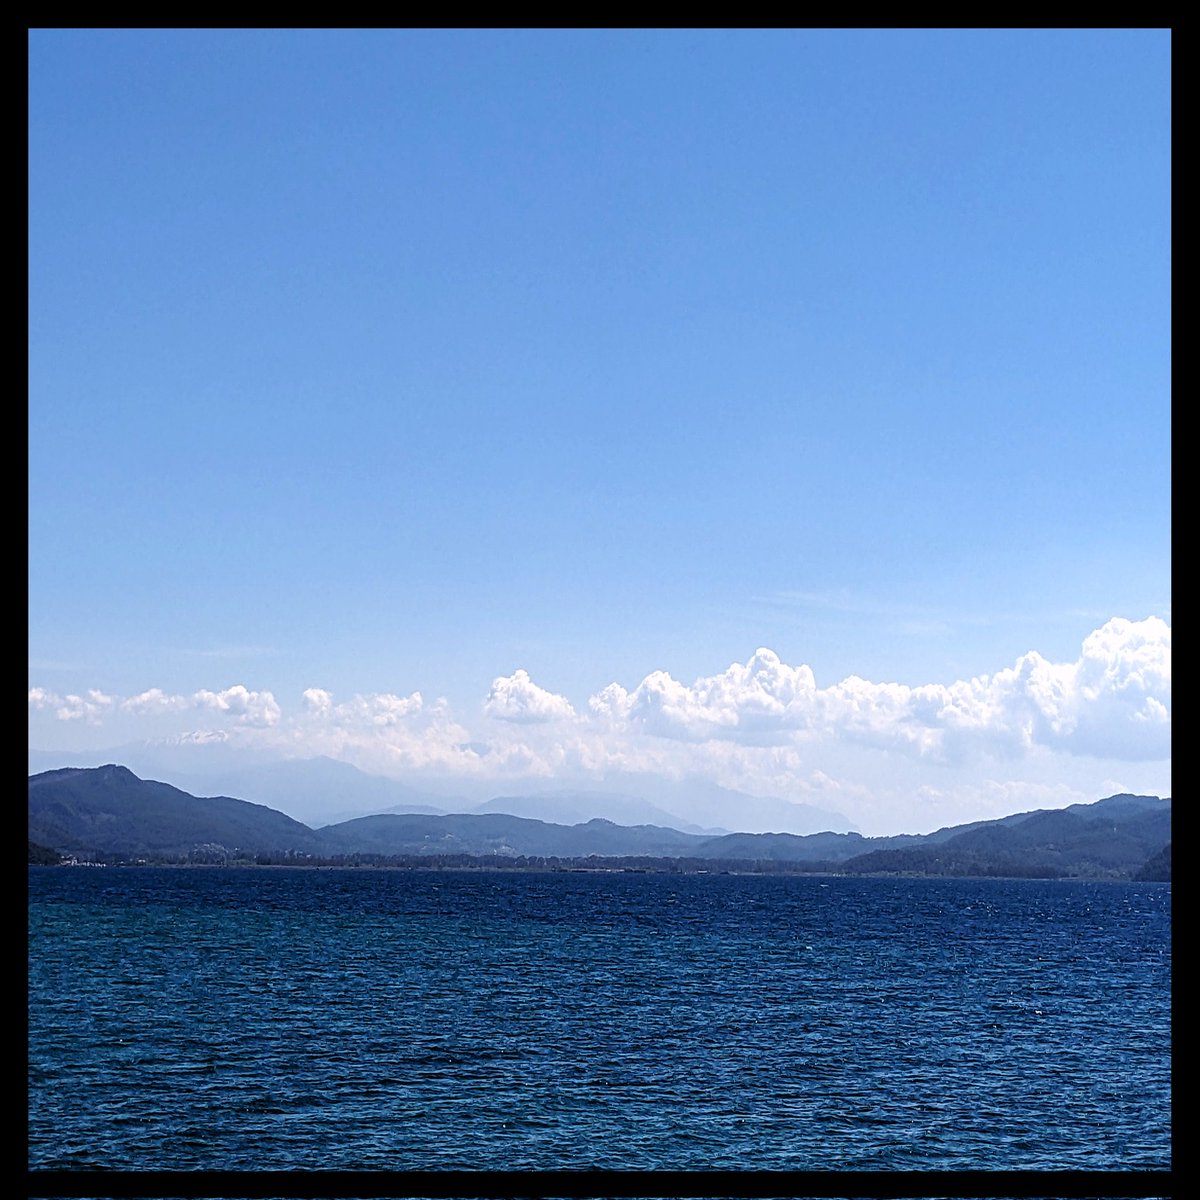 #akyaka #ula #muğla #waterfront #shoreline #mountainrange #mountains #shore #mountain #sky #clouds #türkiye #turkey